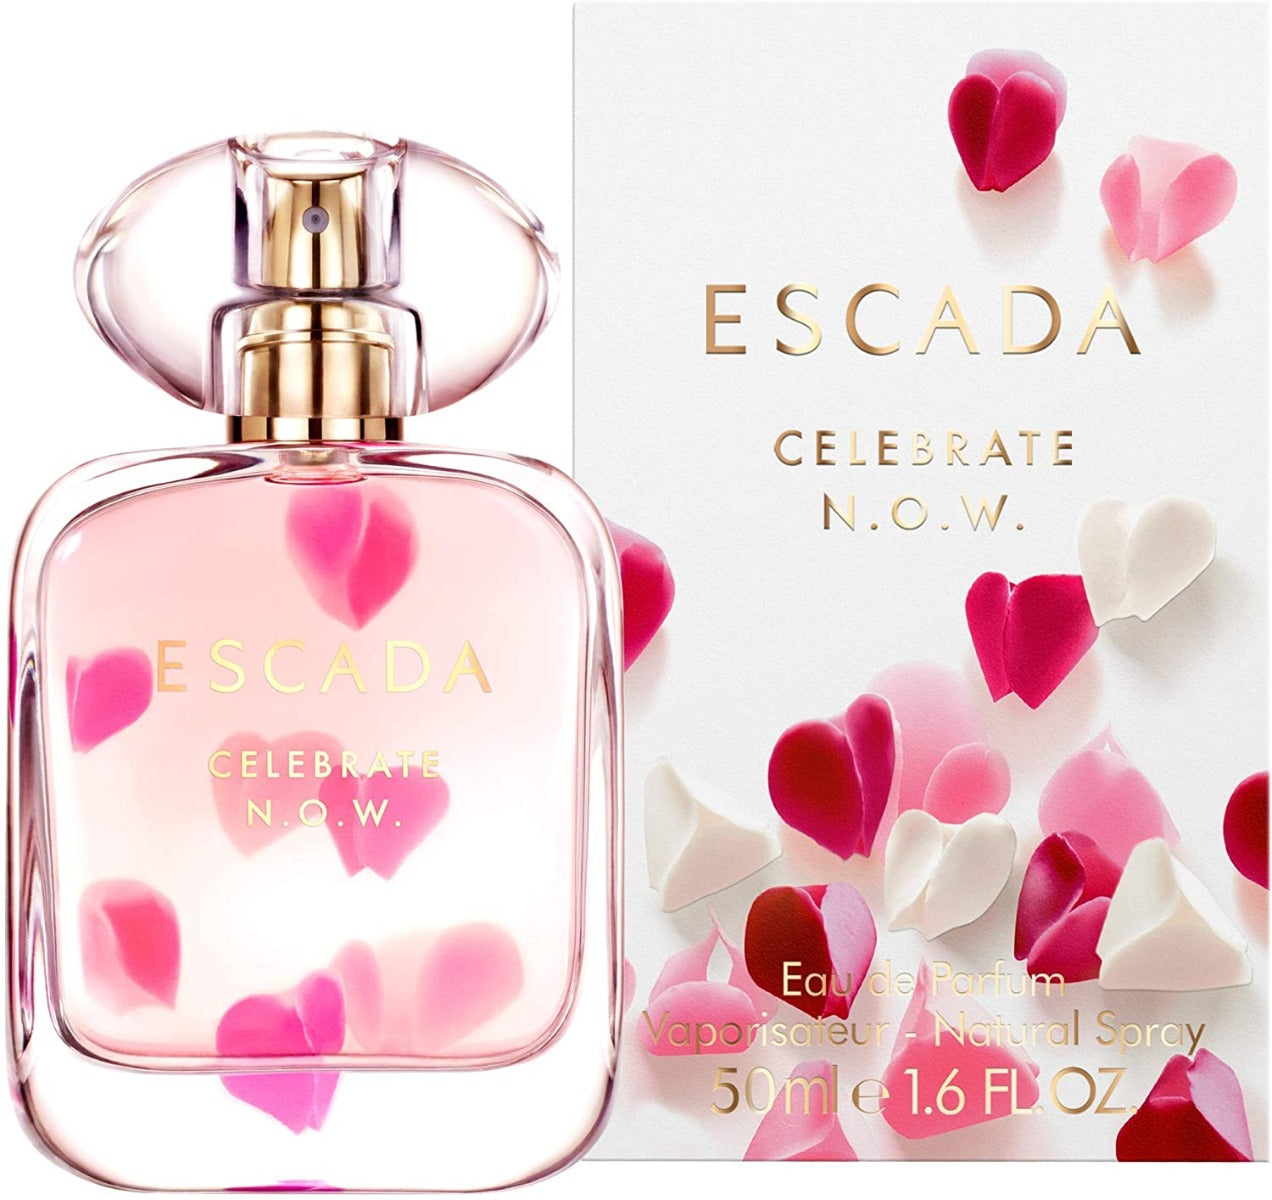 ESCADA Celebrate Now - Perfume For Women - EDP 50 ml - samawa perfumes 